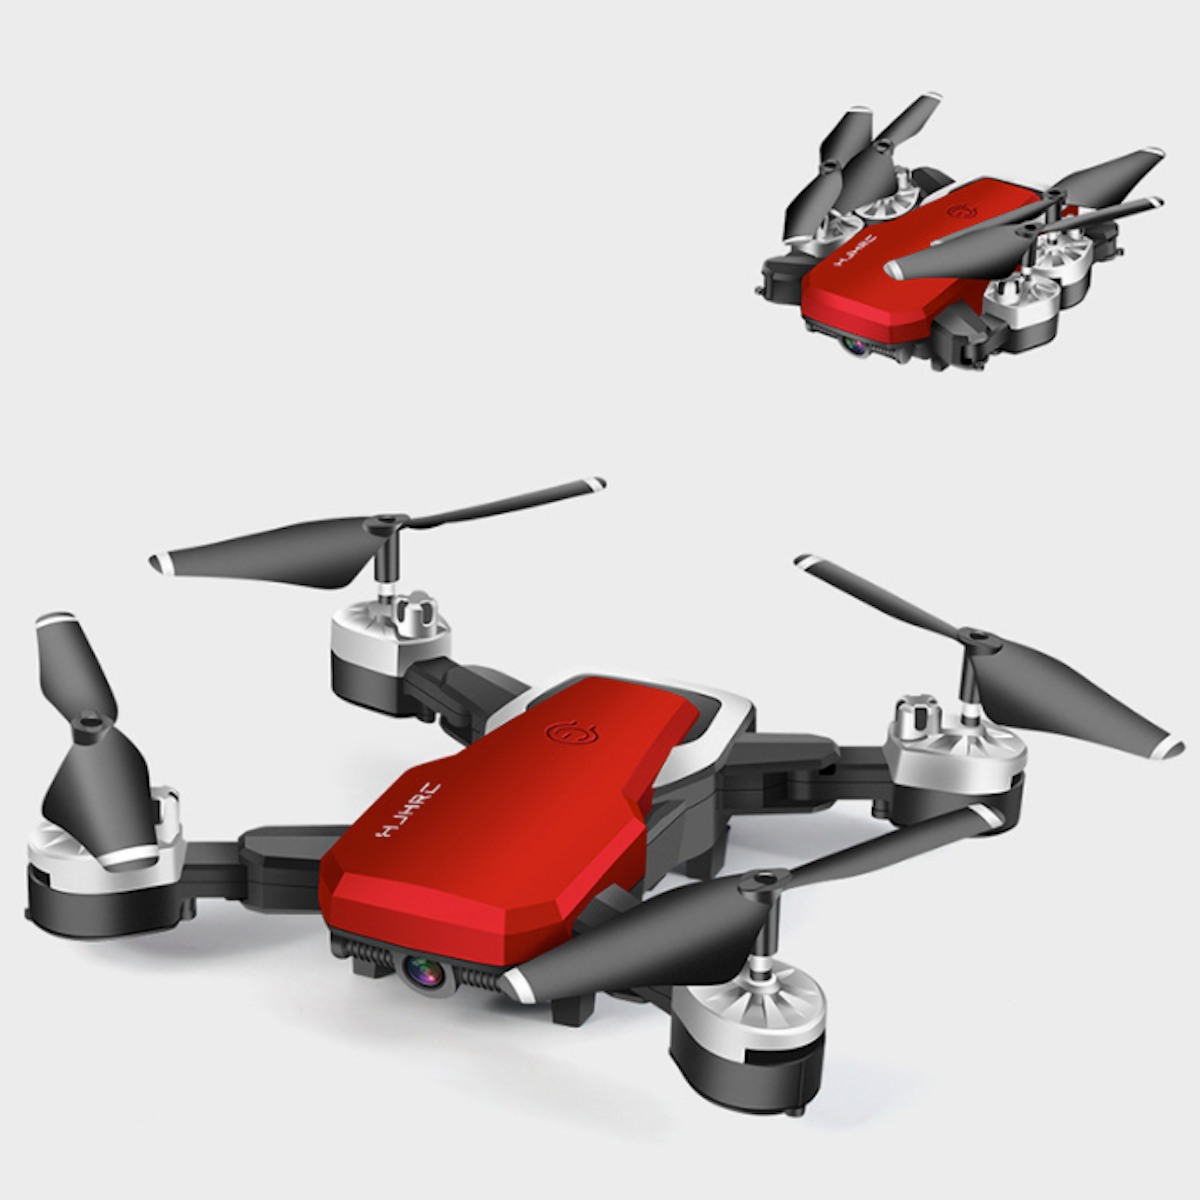 Ninja Dragon J10X WiFi RC Quadcopter Drone with 4K Wide Angle HD Camera